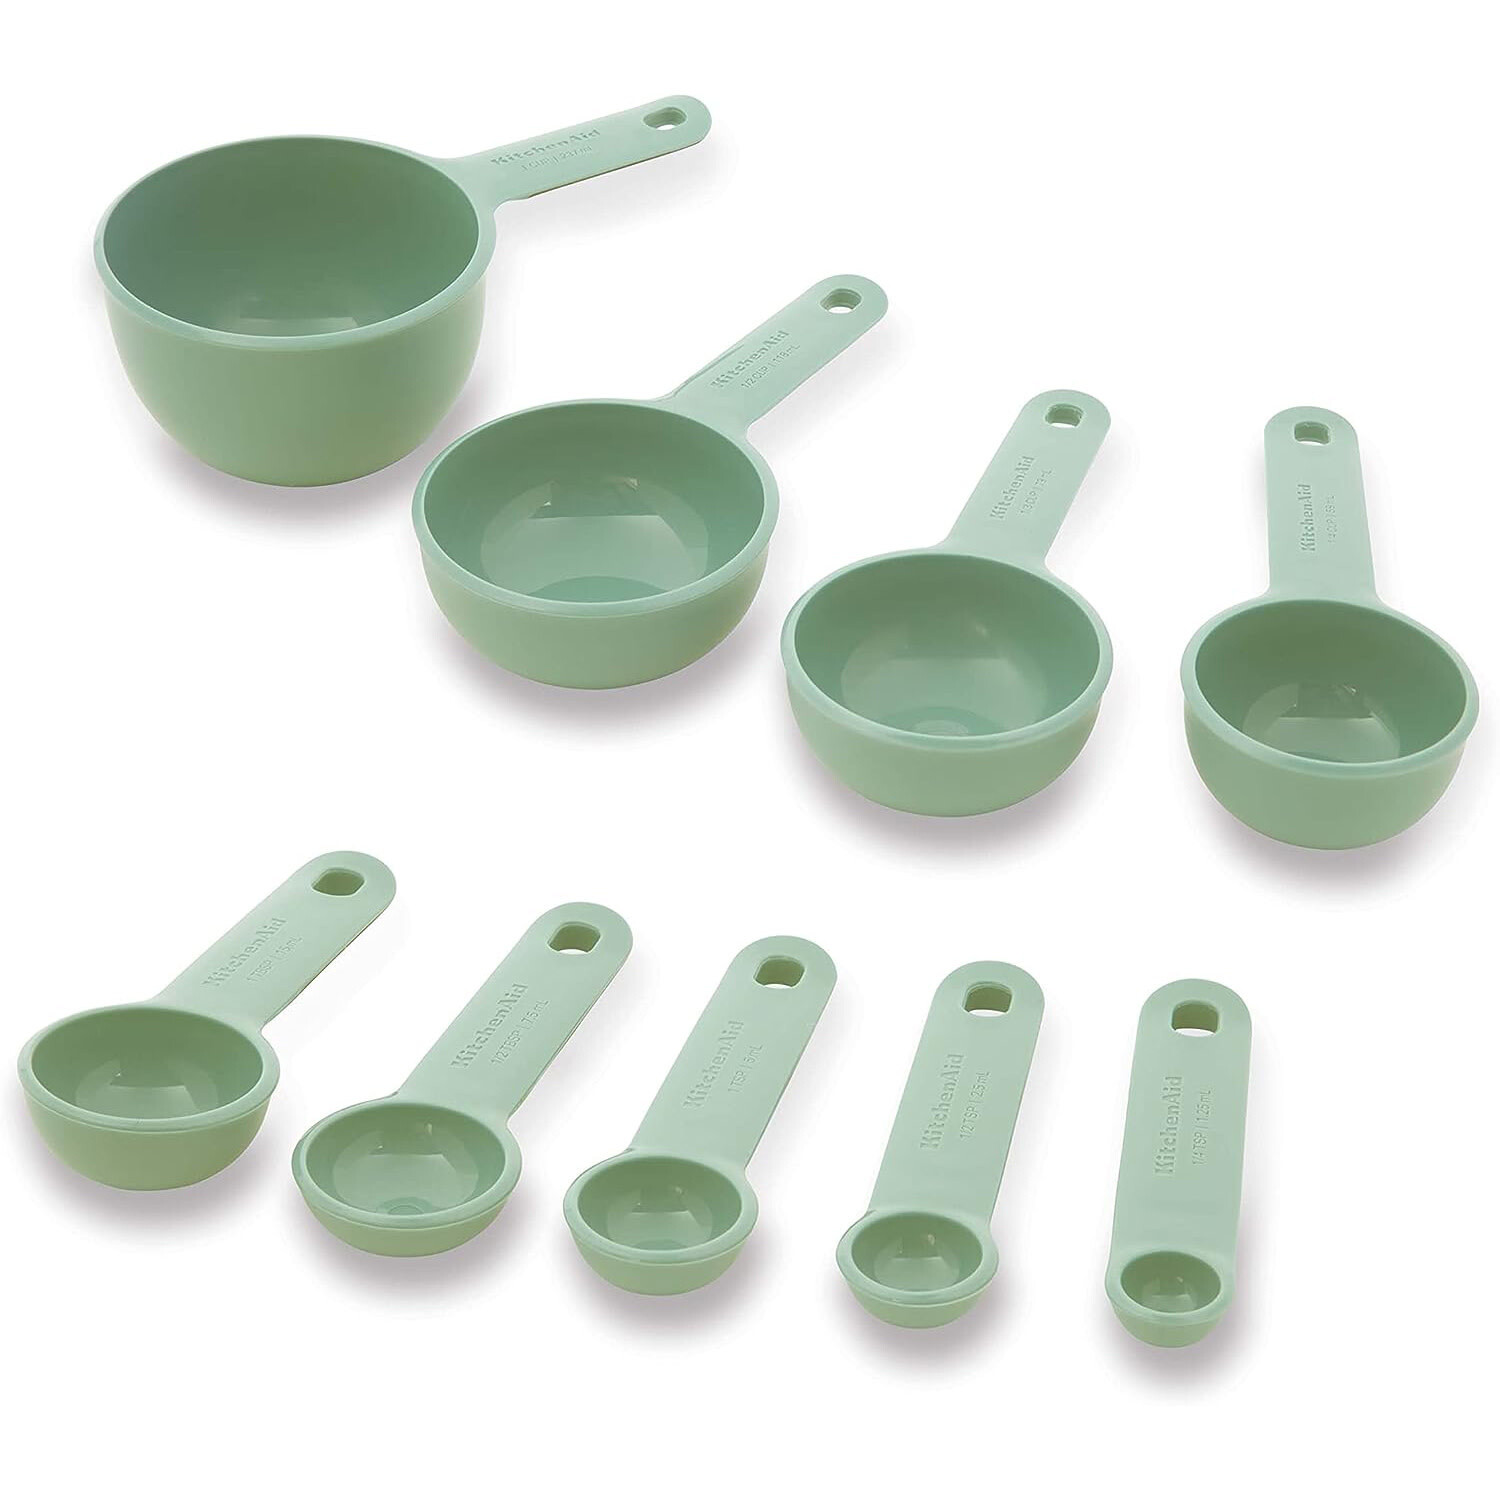  KitchenAid KE475OHPIA Measuring Cups And Spoons Set, Set of 9,  Pistachio/Black: Home & Kitchen